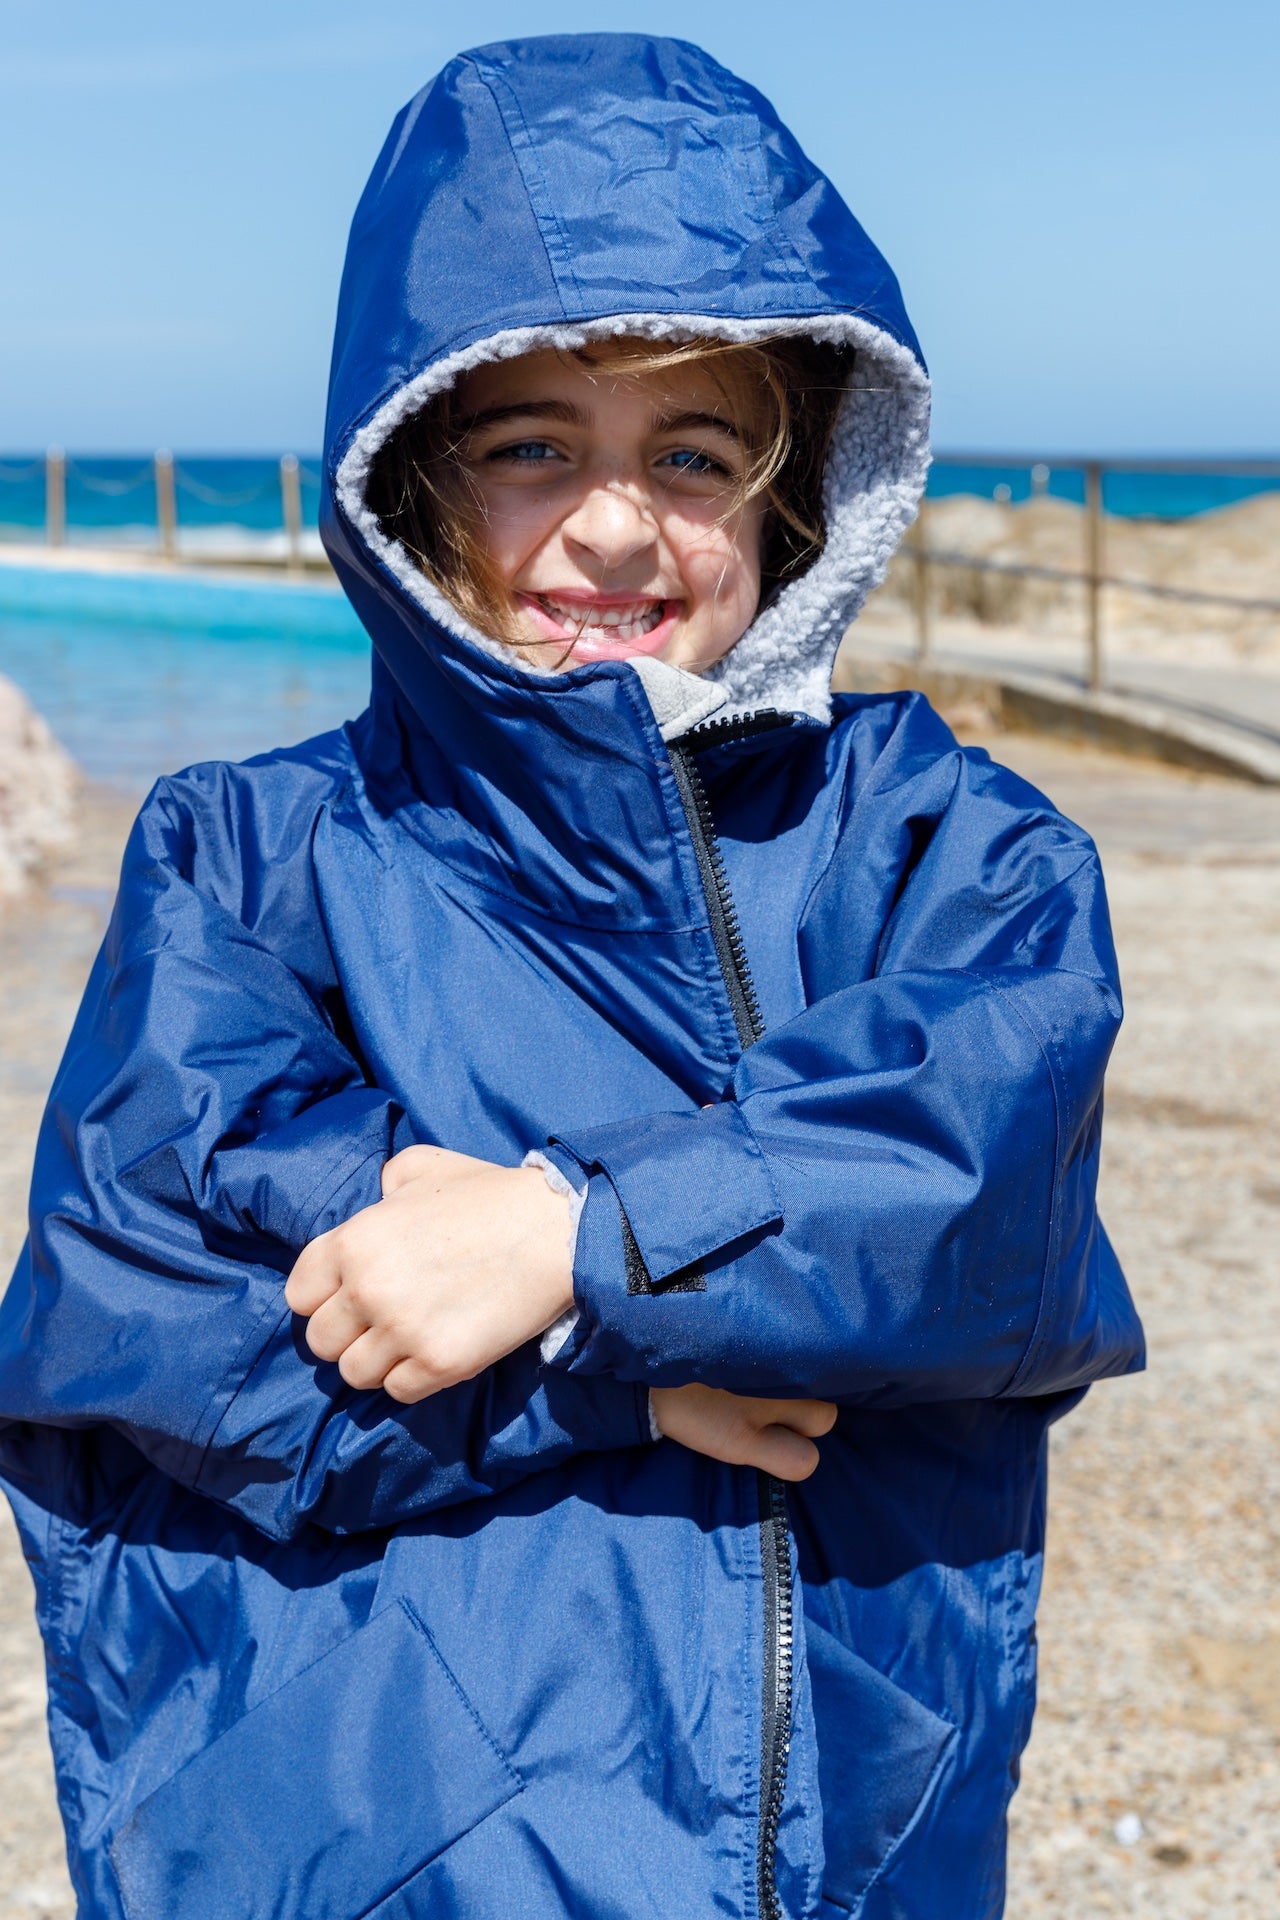 Toasty Ultimate Weatherproof Kids jackets in navy